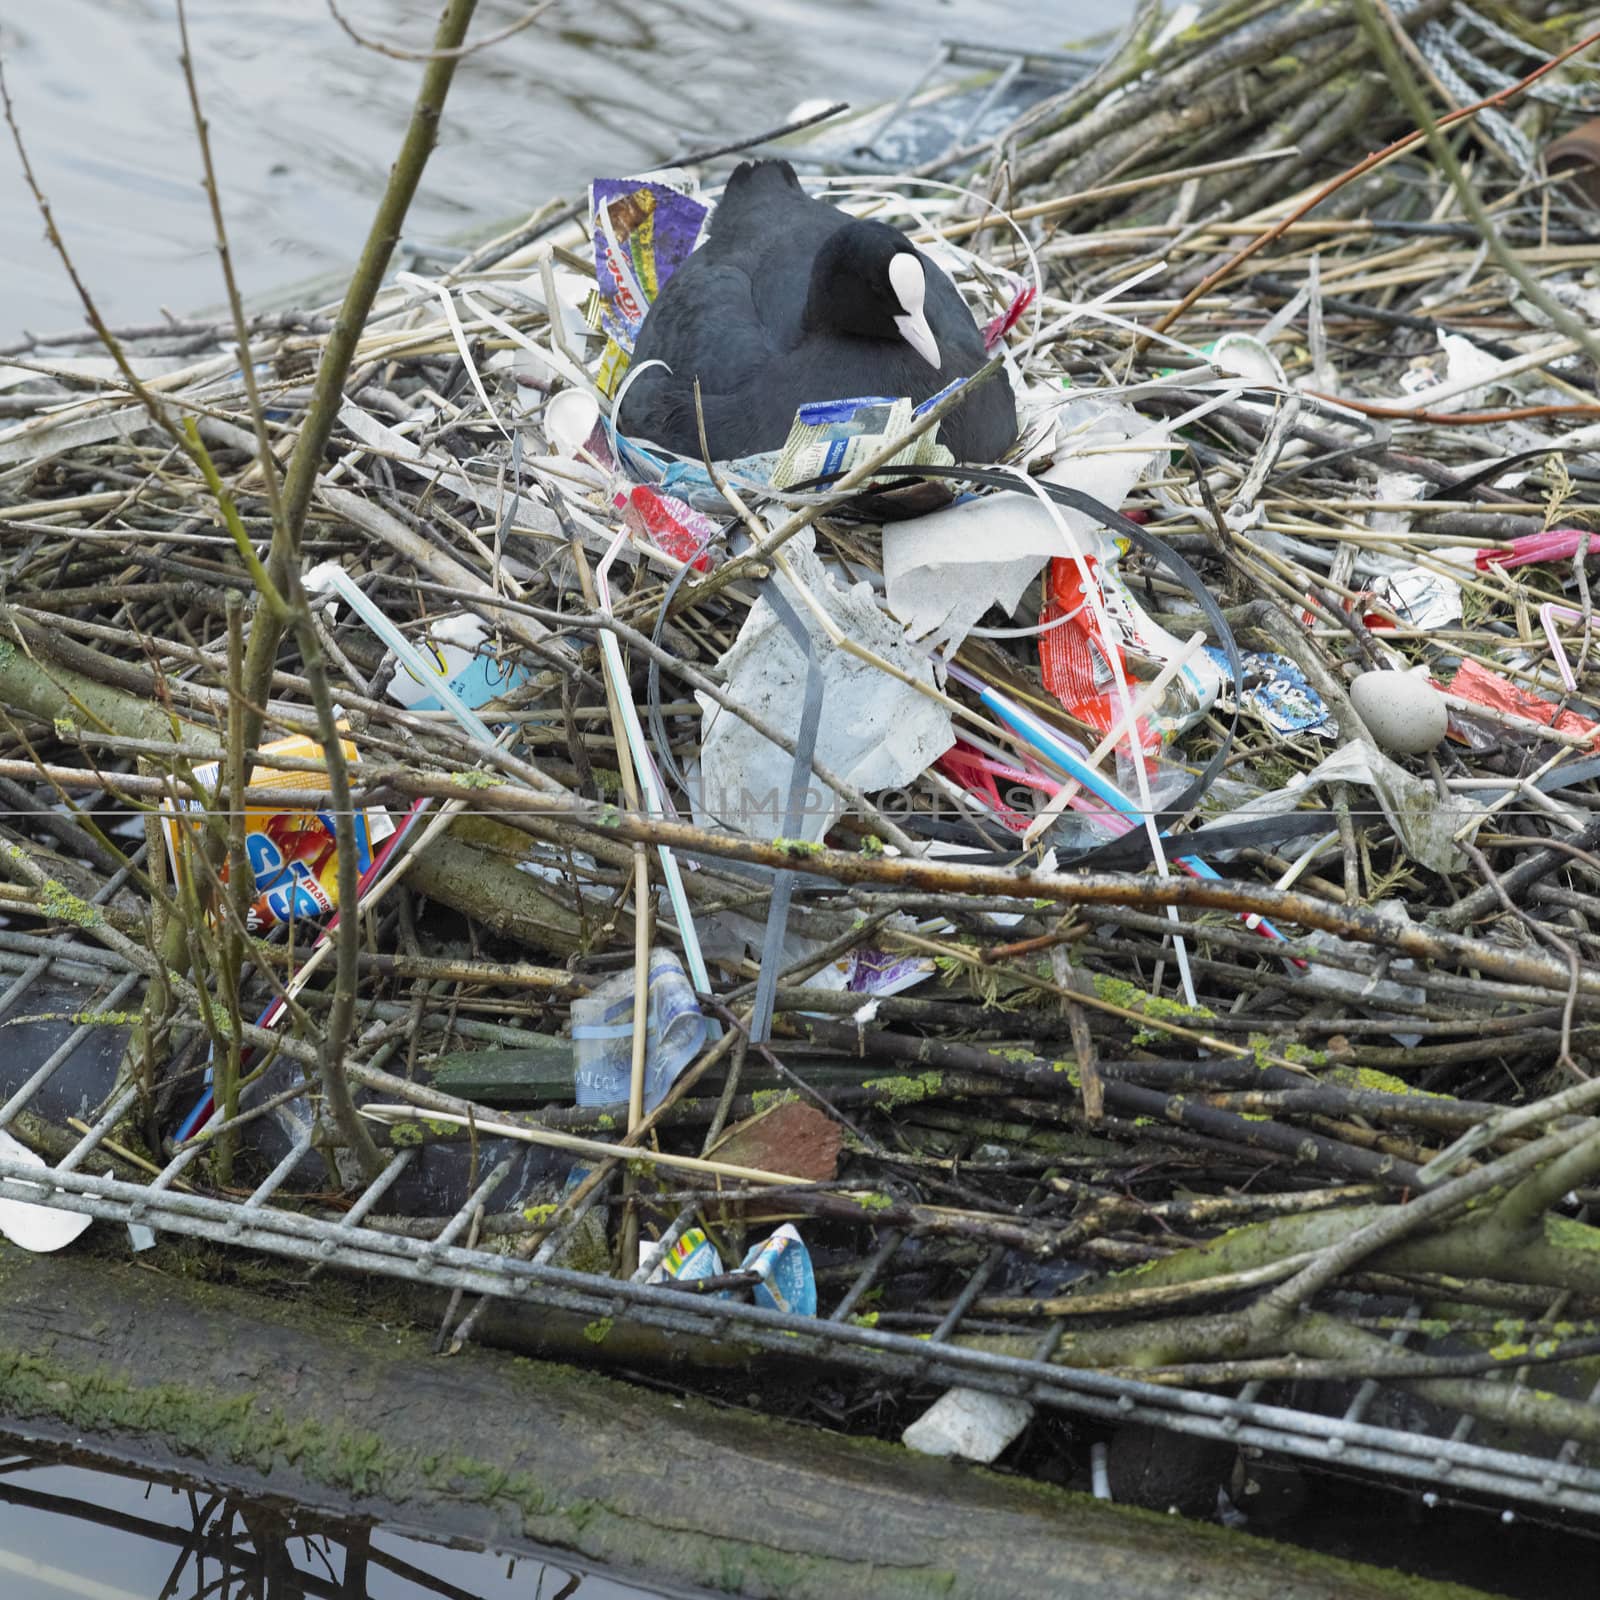 nest with rubbish, Alkmaar, Netherlands by phbcz